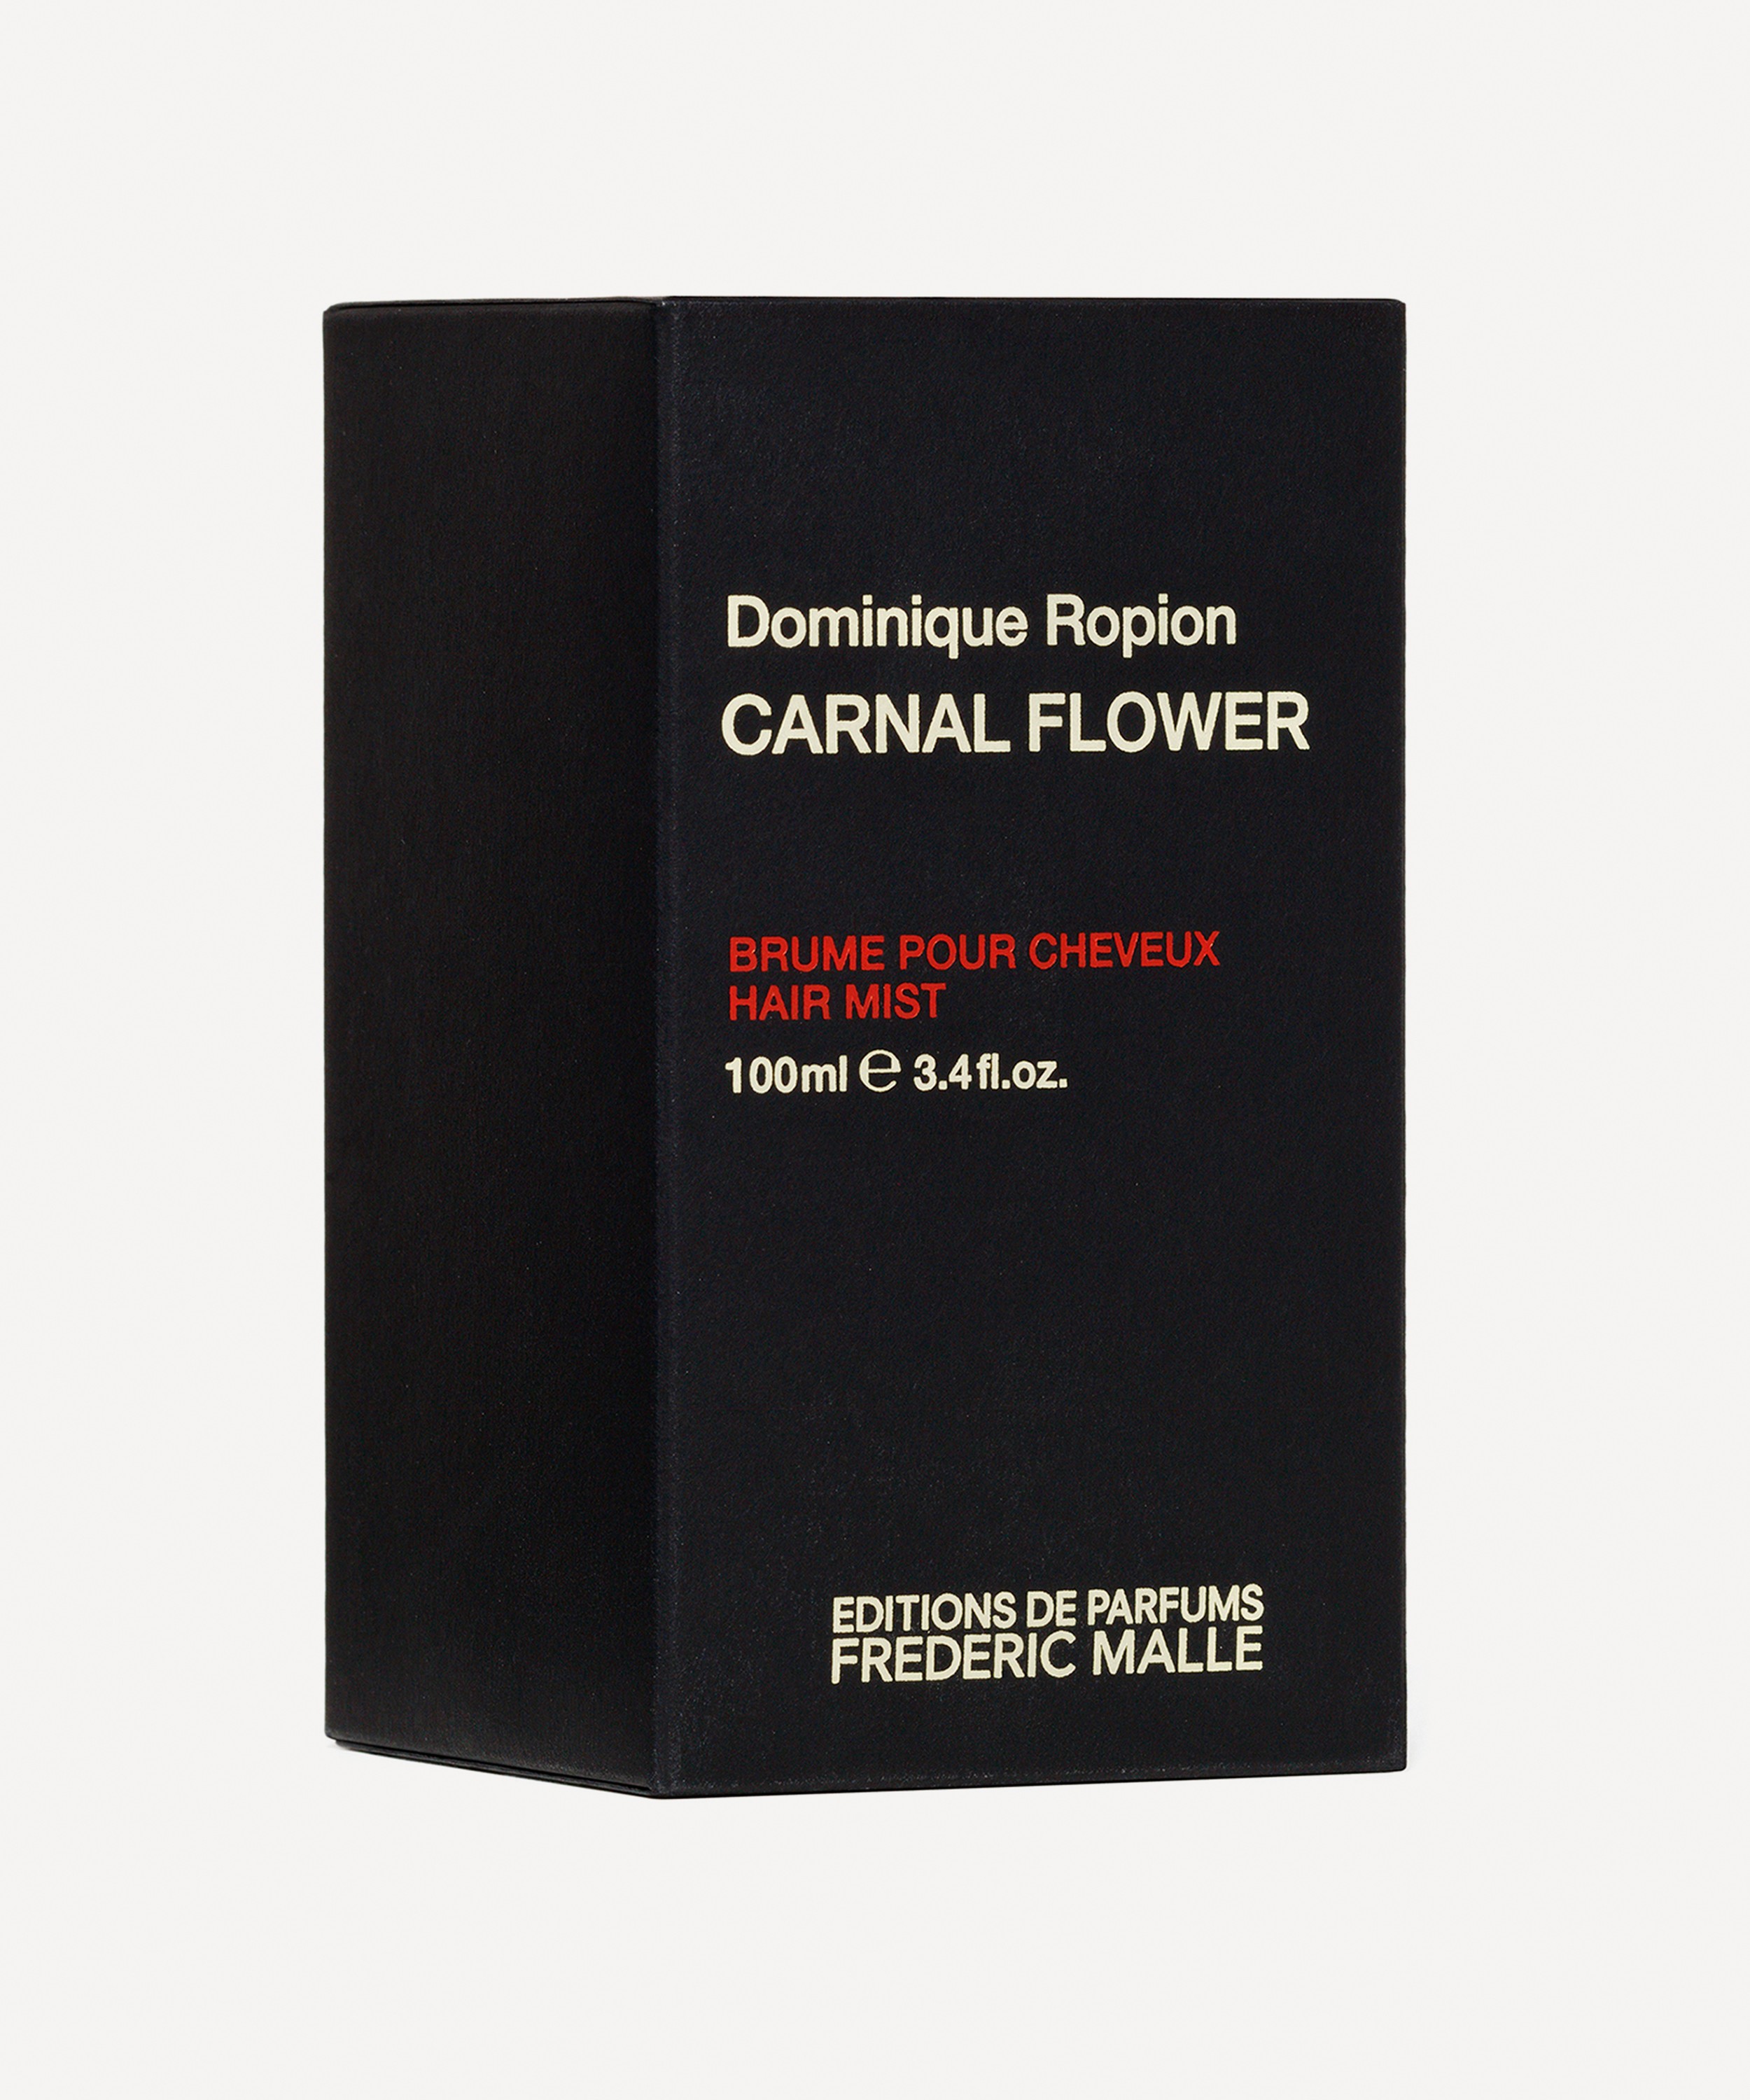 Editions de Parfums Frédéric Malle - Carnal Flower Hair Mist 100ml image number 1